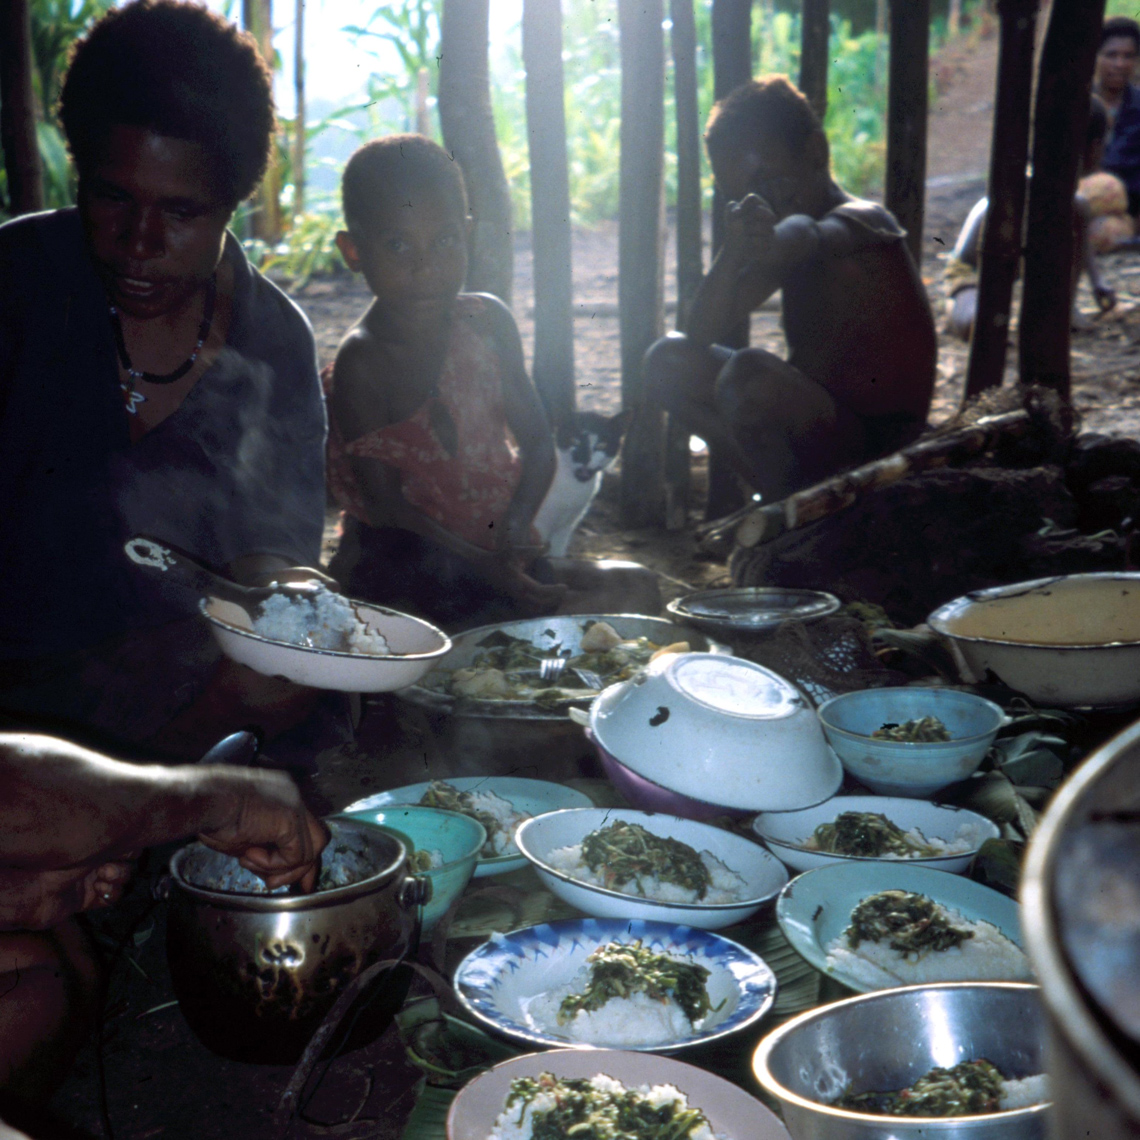 Serving Out Supper, New Guinea Village Scene, New Guinea Art Field Photo